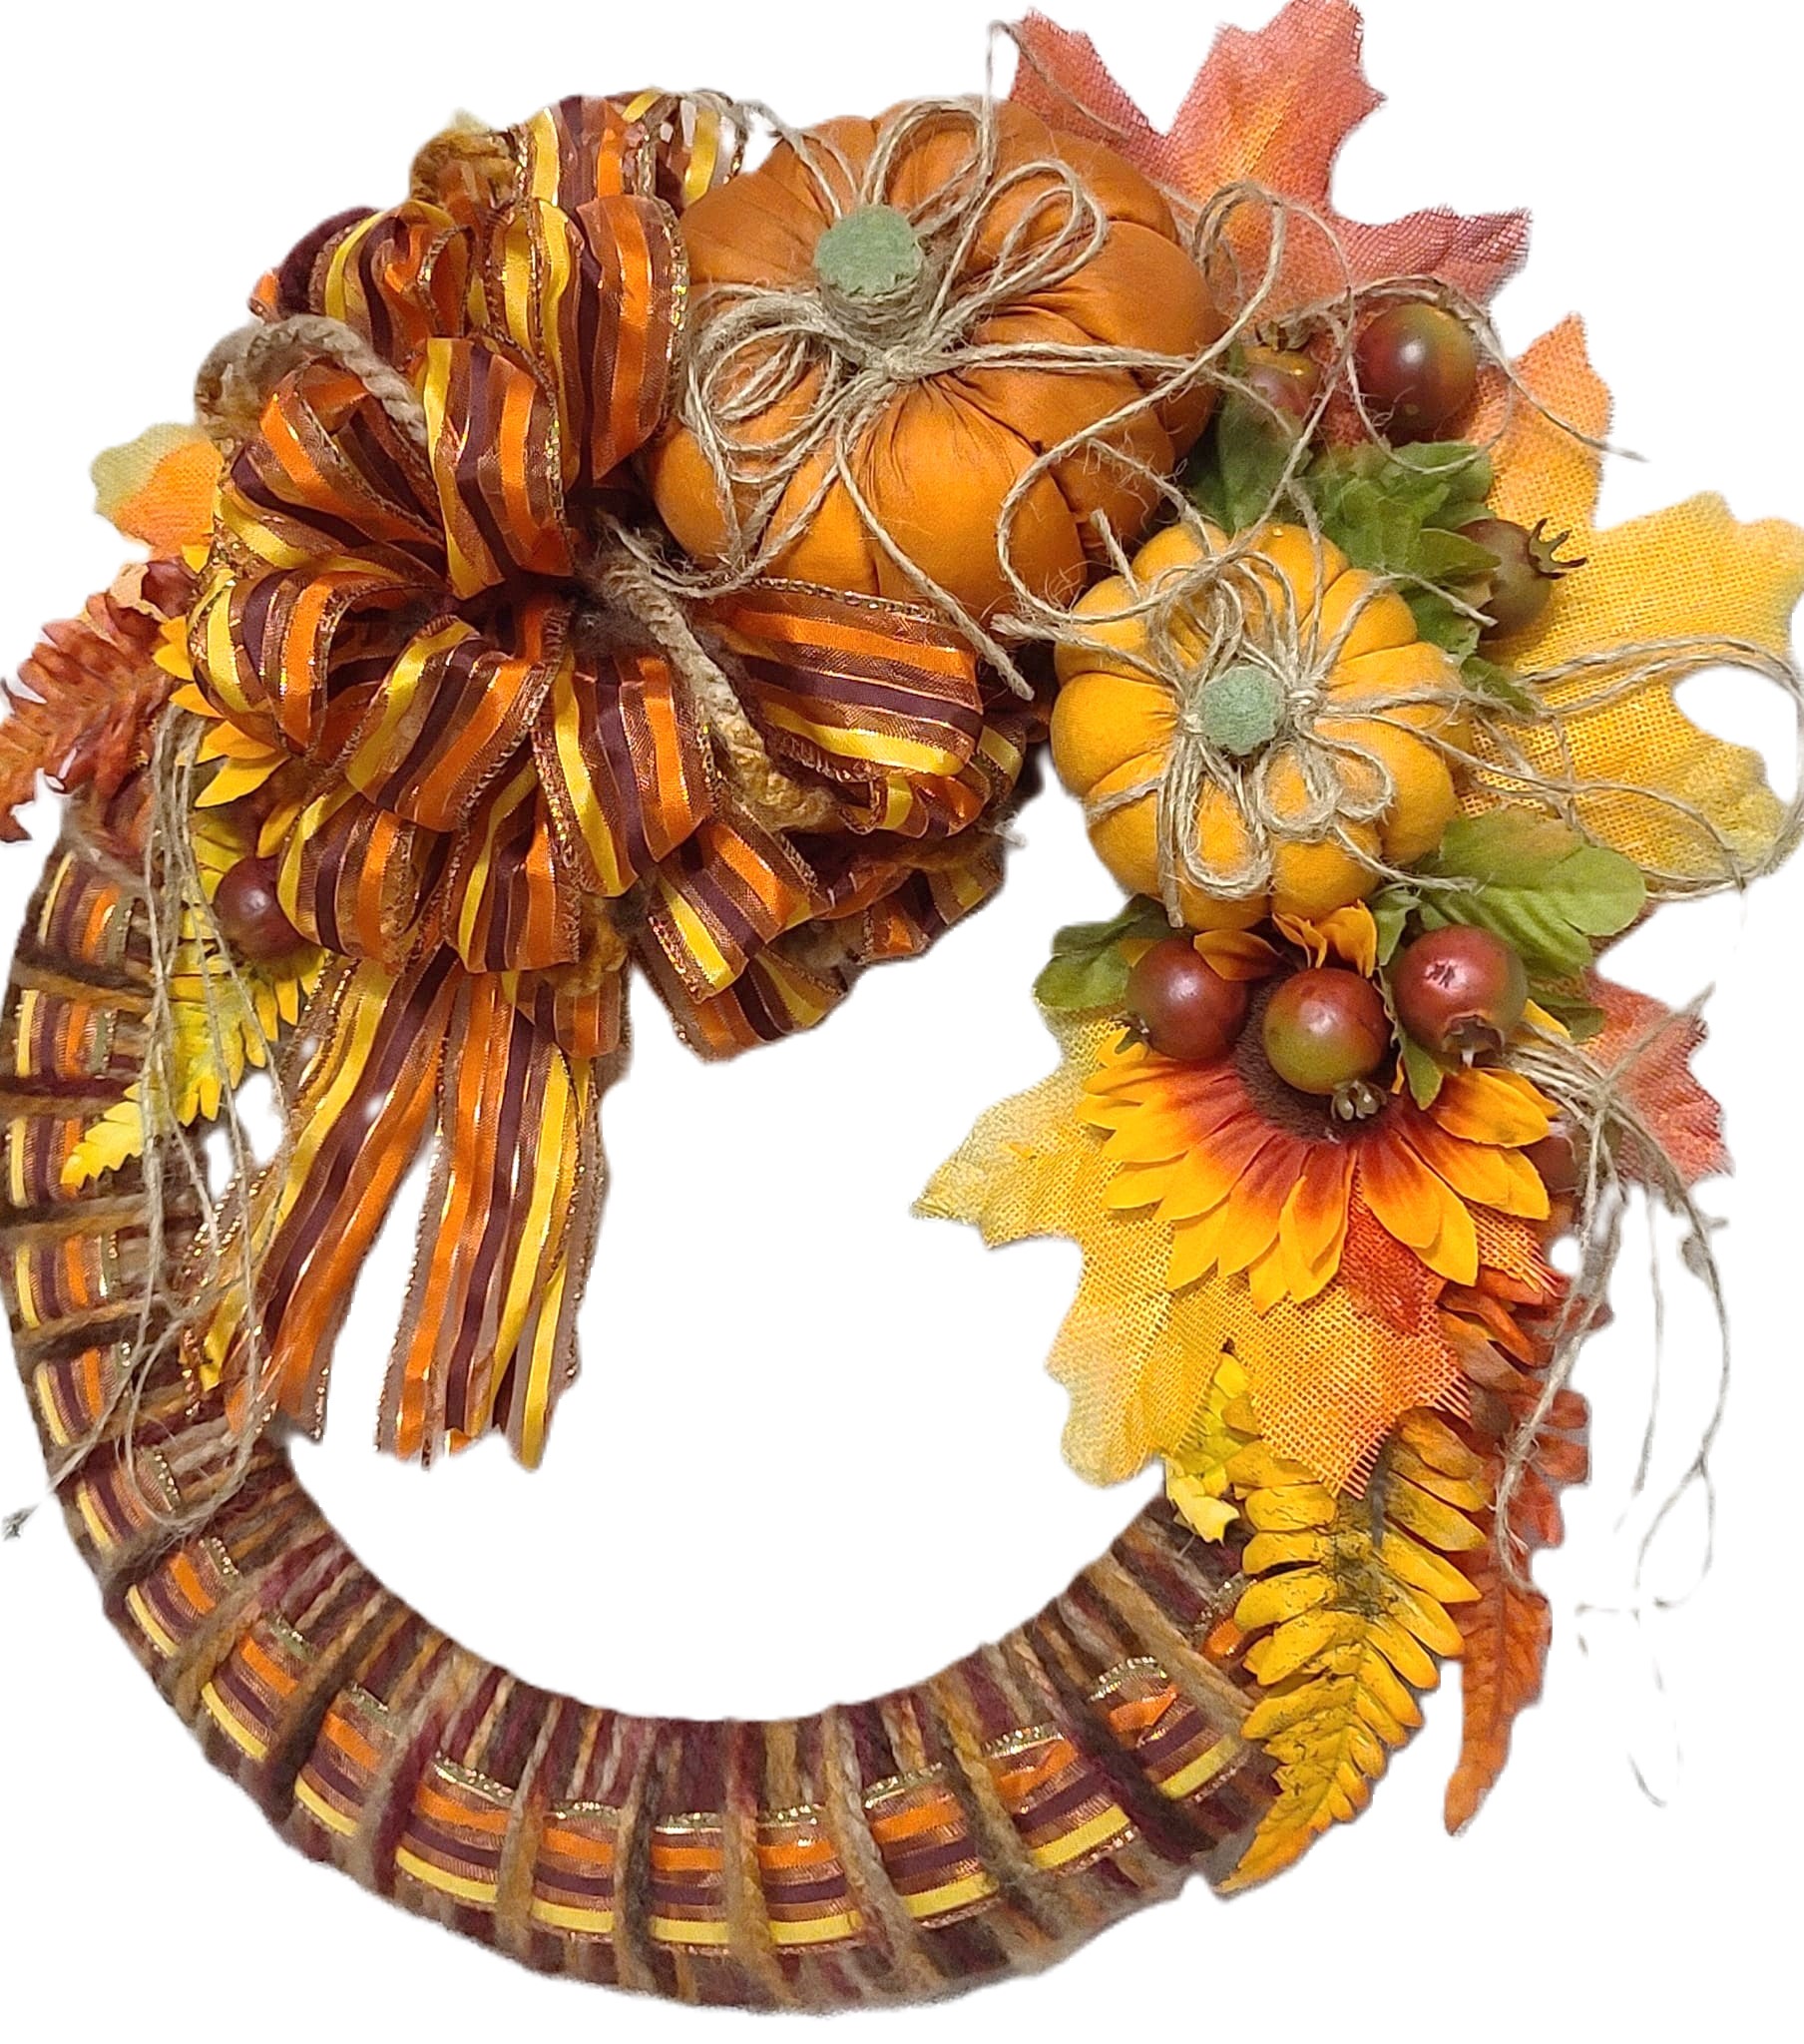 Yarn harvest wreath with pumpkins and foil foilage